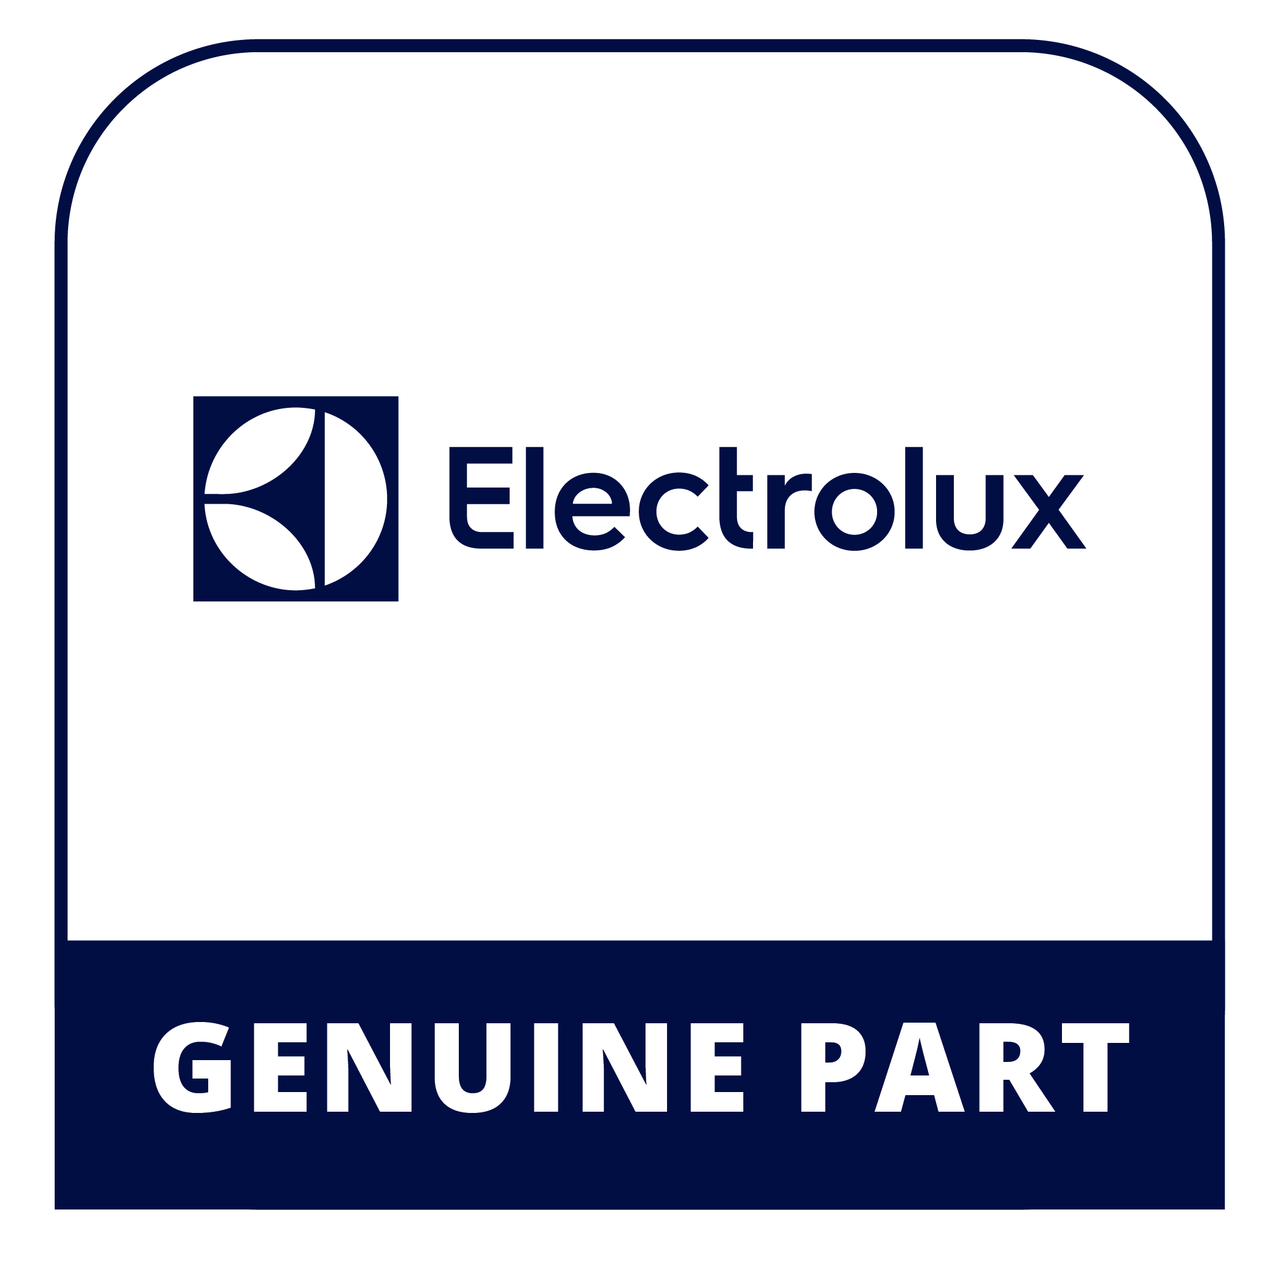 Frigidaire - Electrolux 241688701 - Door Seal - Genuine Electrolux Part